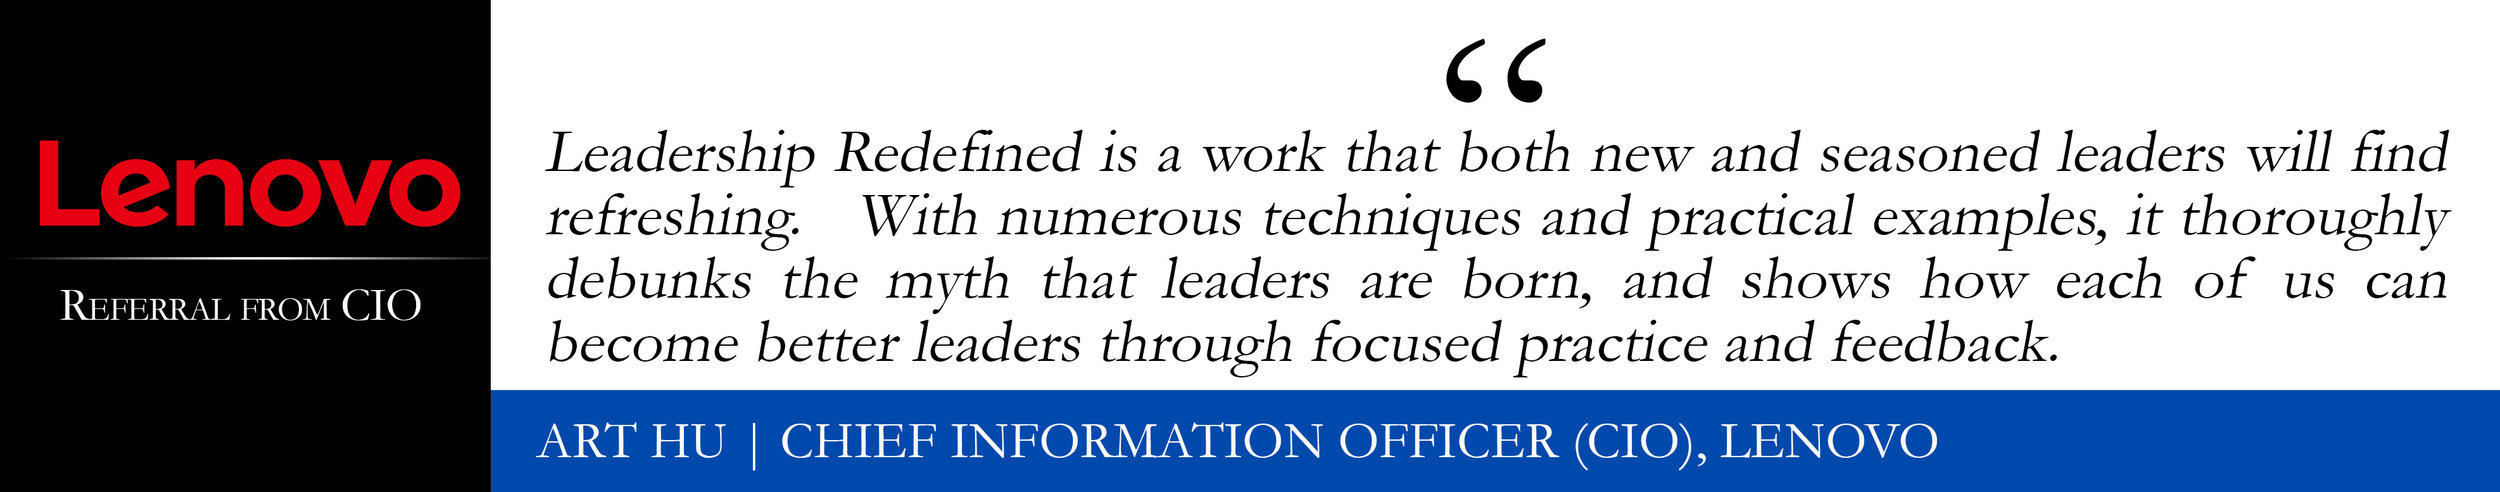 Leadership Redefined Quote 5.jpg